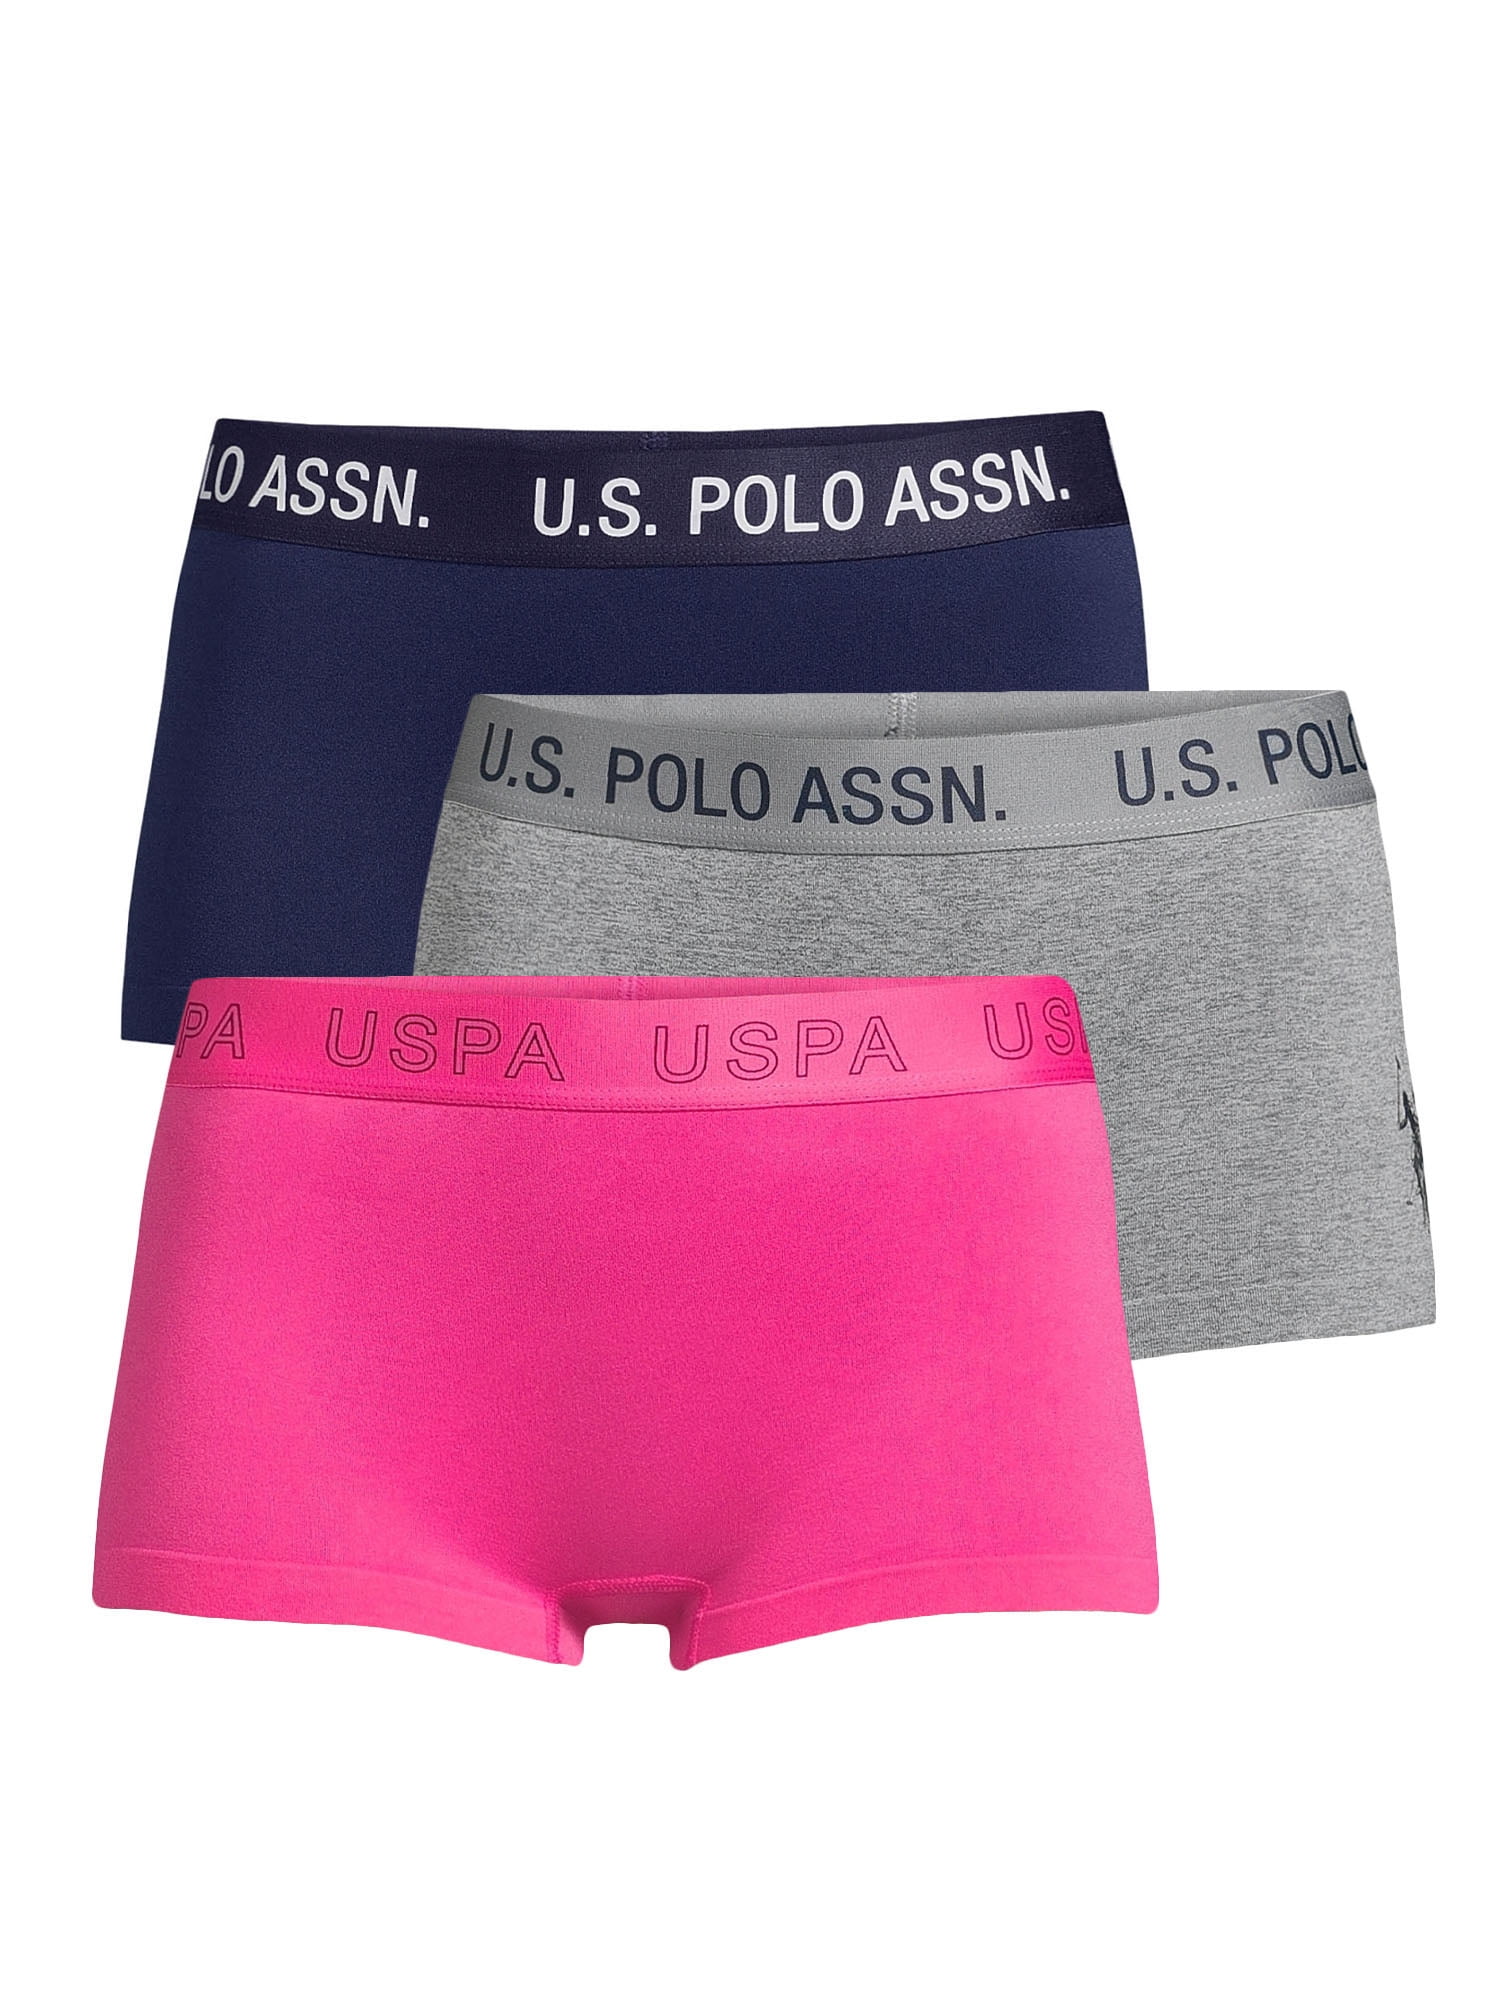 Polo Assn Womens Multi Pack Elastic Waist Cotton Lined Boyshort Panties U.S